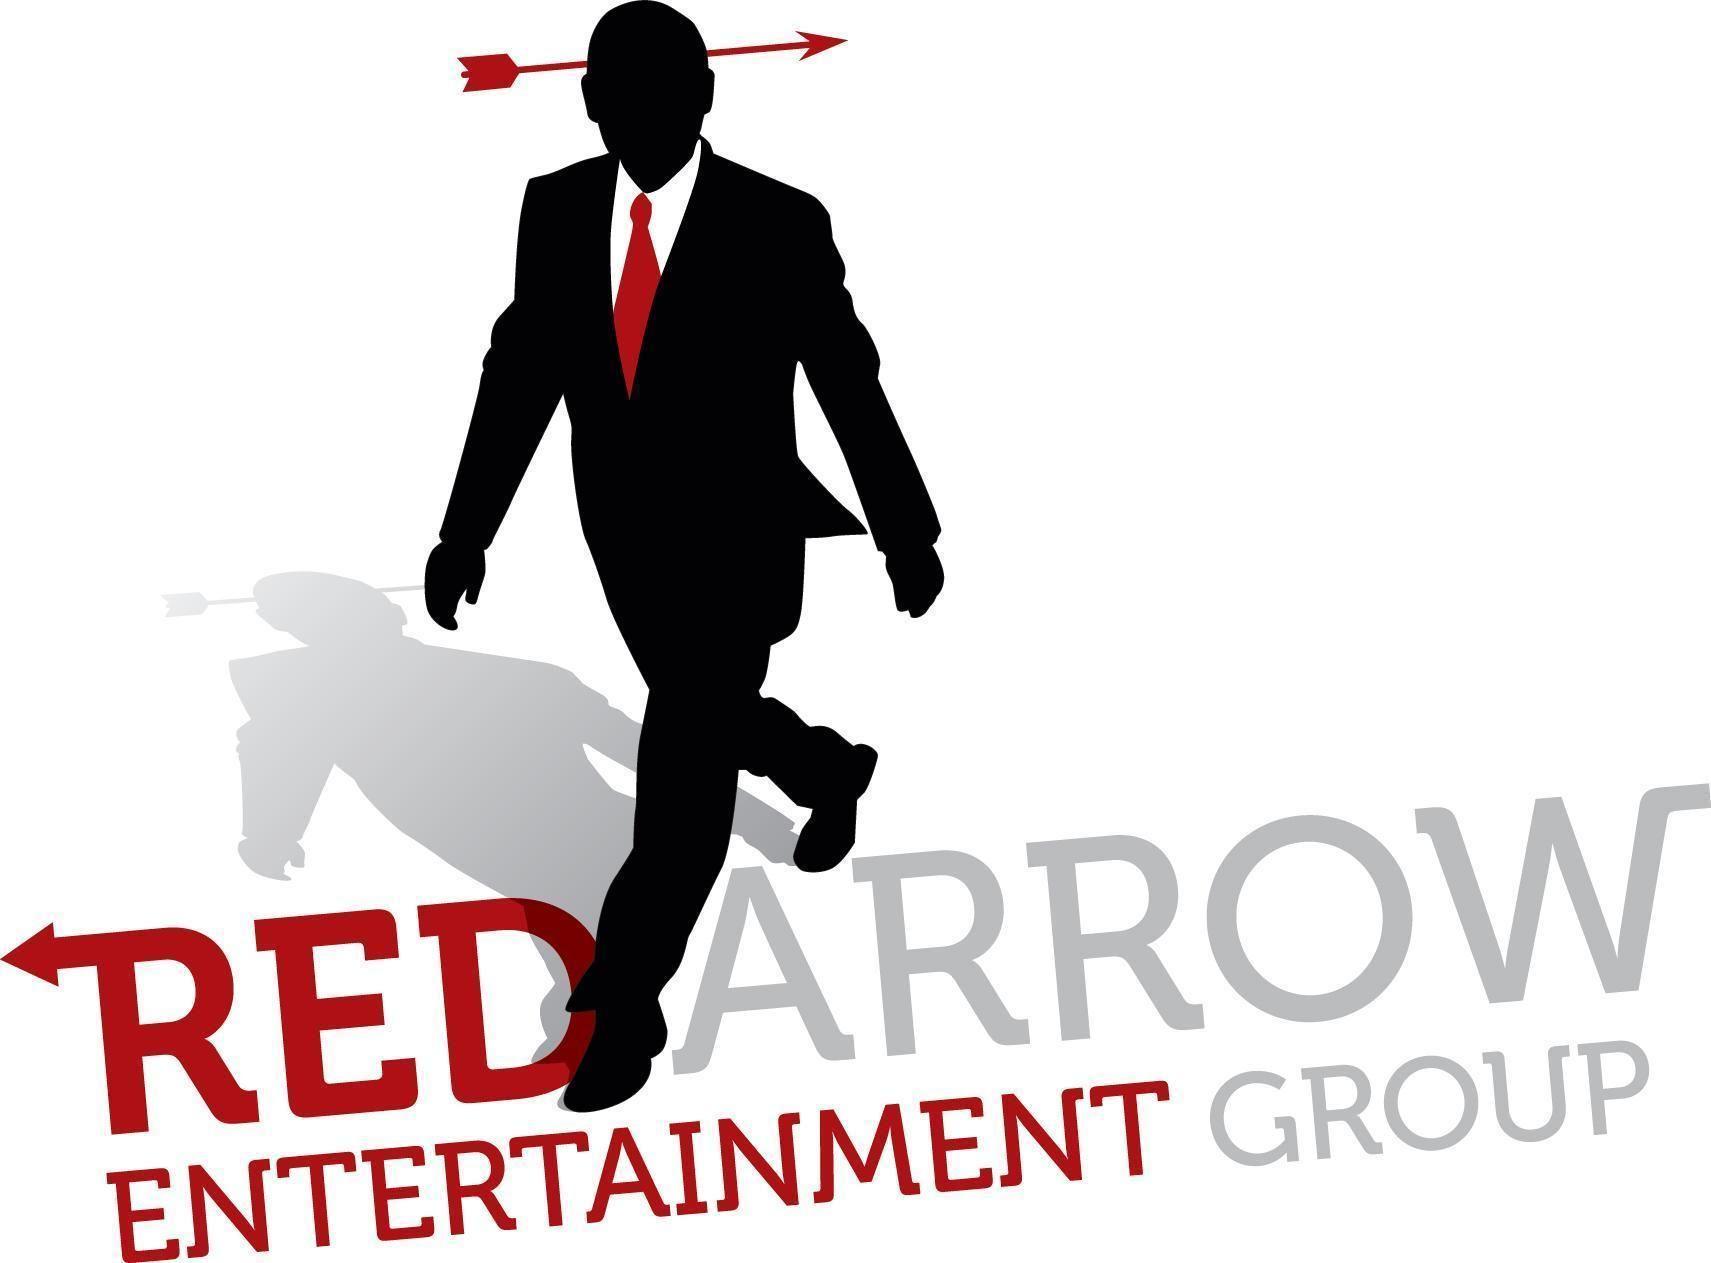 Red Entertainment Logo - Red Arrow Studios | ZoomInfo.com